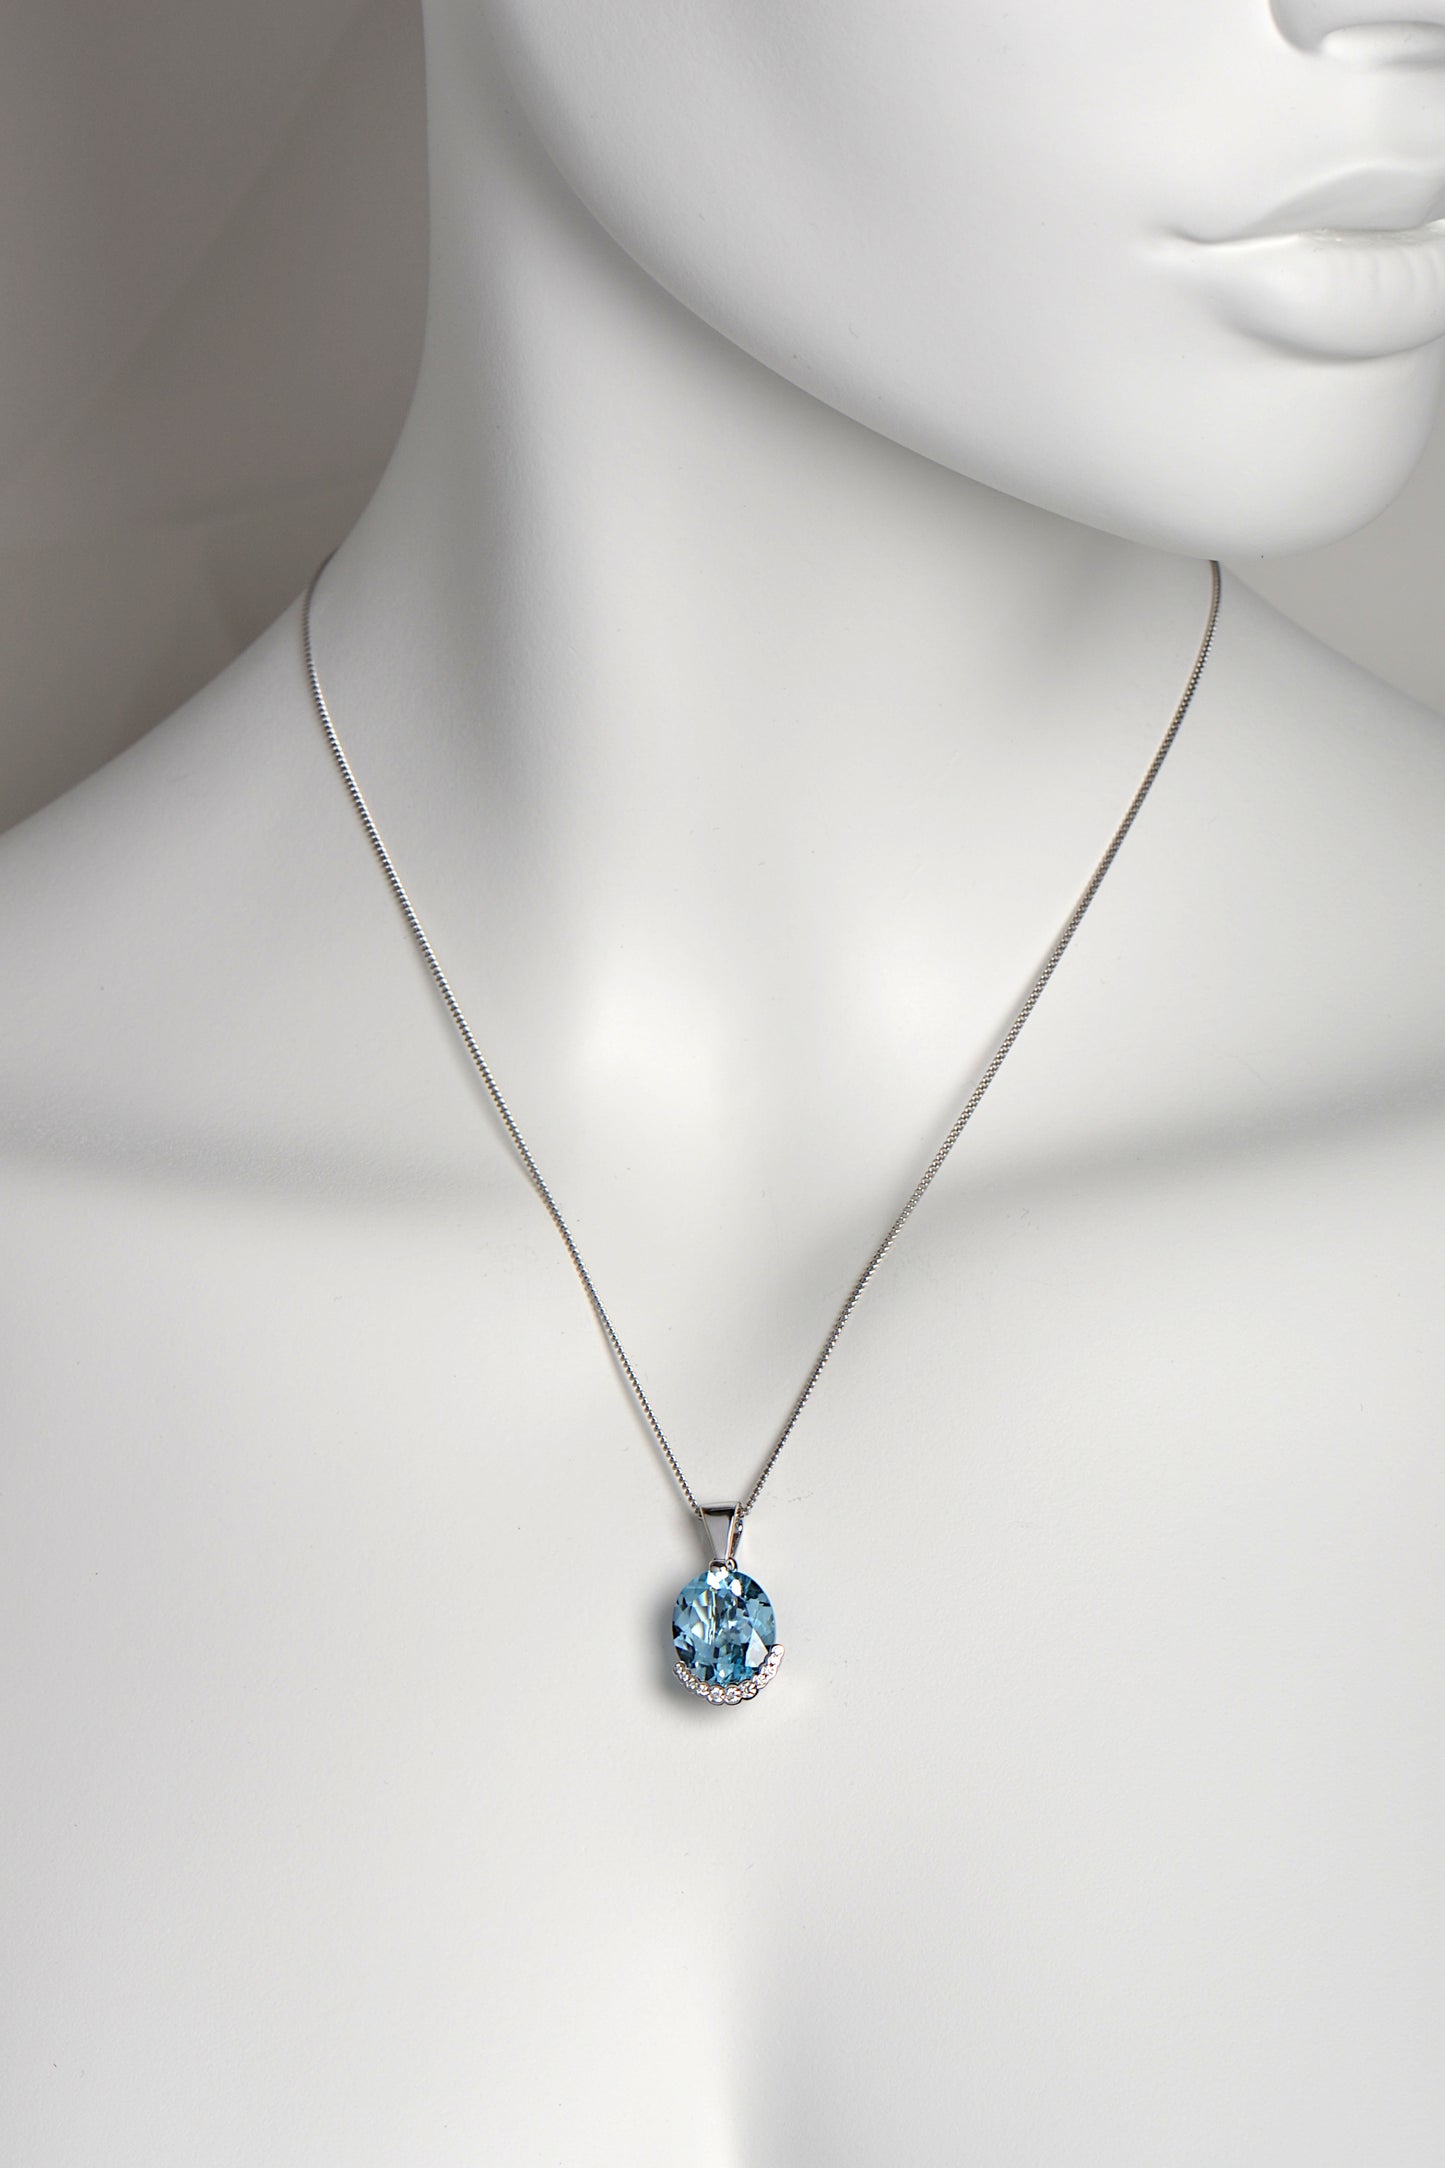 Fairypools diamond and sky blue topaz white gold pendant